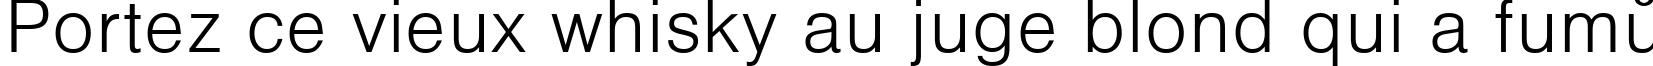 Пример написания шрифтом Vanta Light Plain:001.001 текста на французском